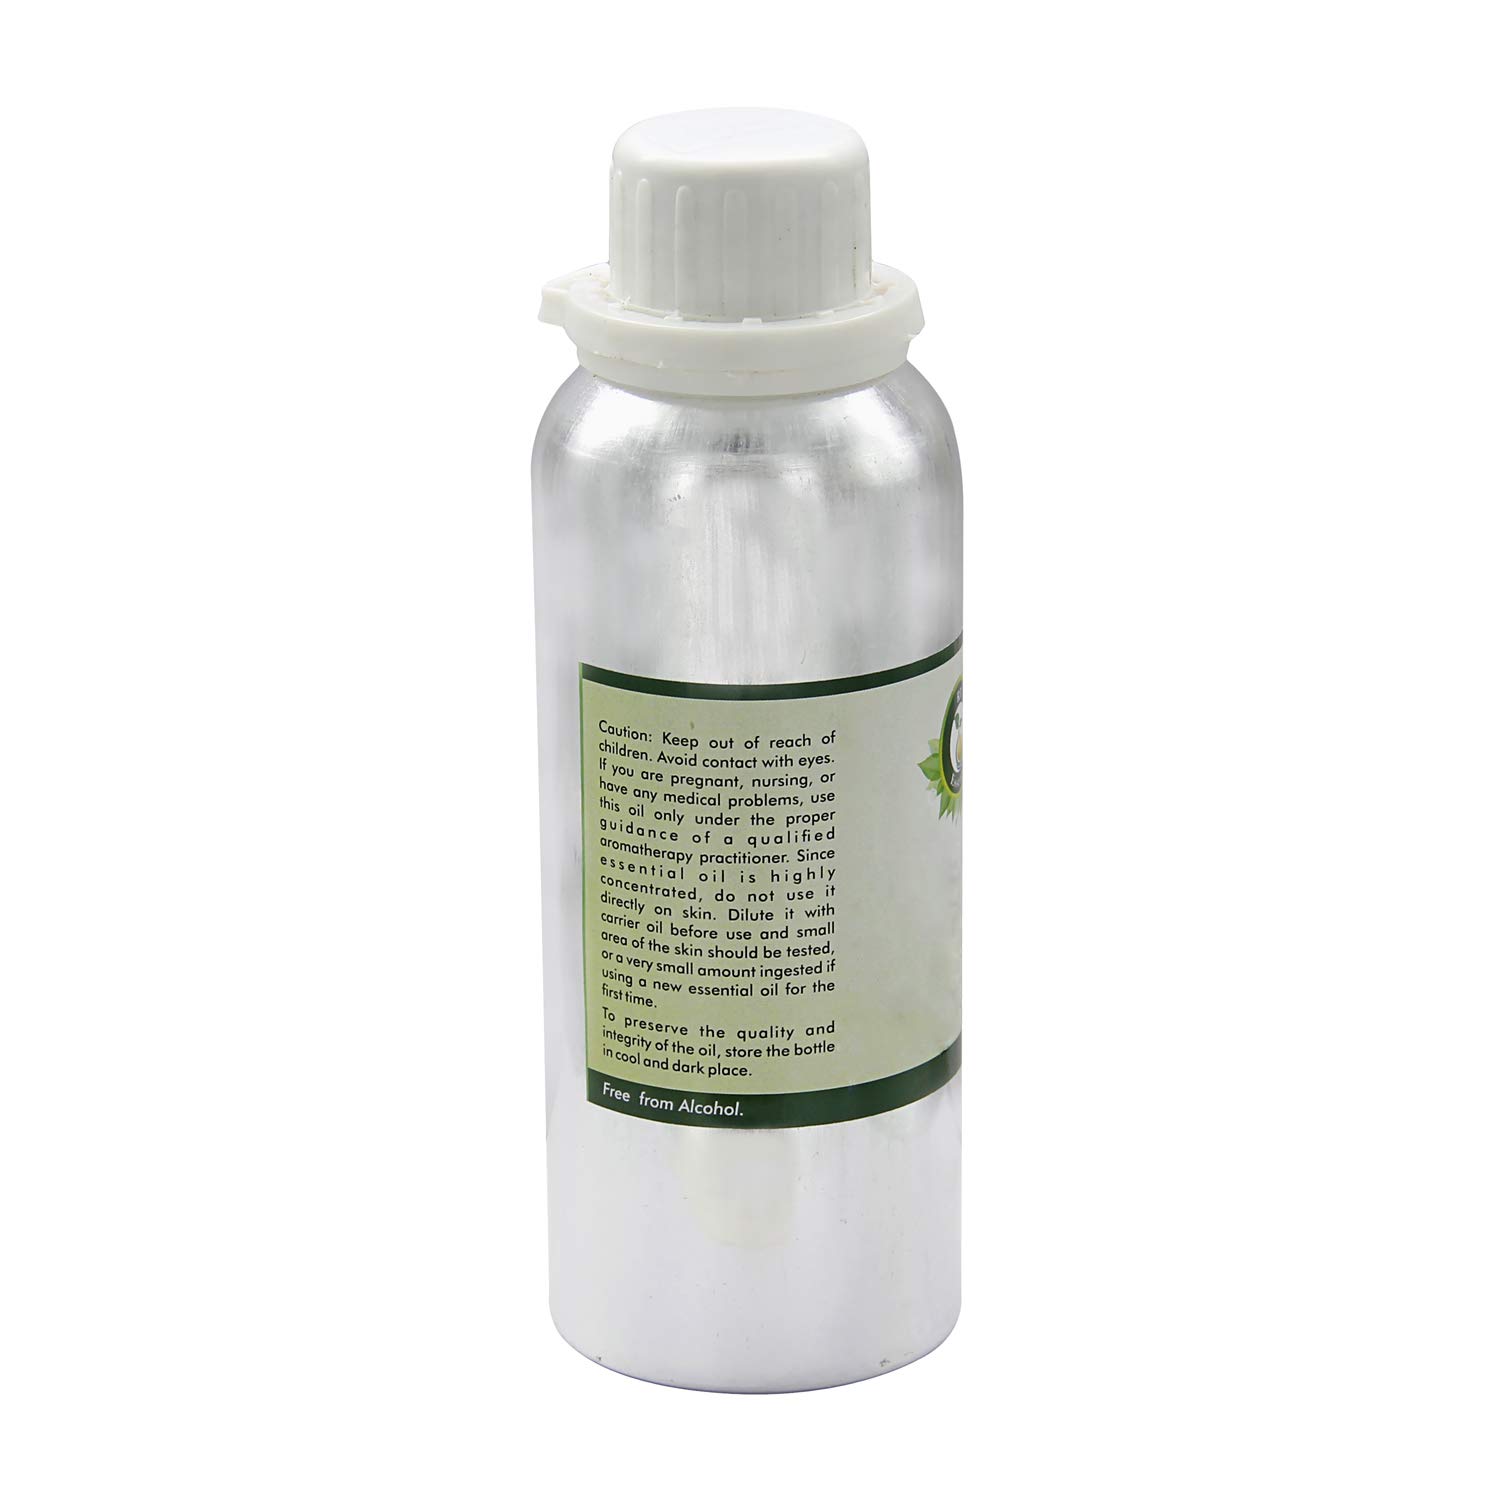 R V Essential Pure Myrrh Essential Oil 300ml (10oz)- Commiphora Myrrha (100% Pure and Natural Therapeutic Grade)